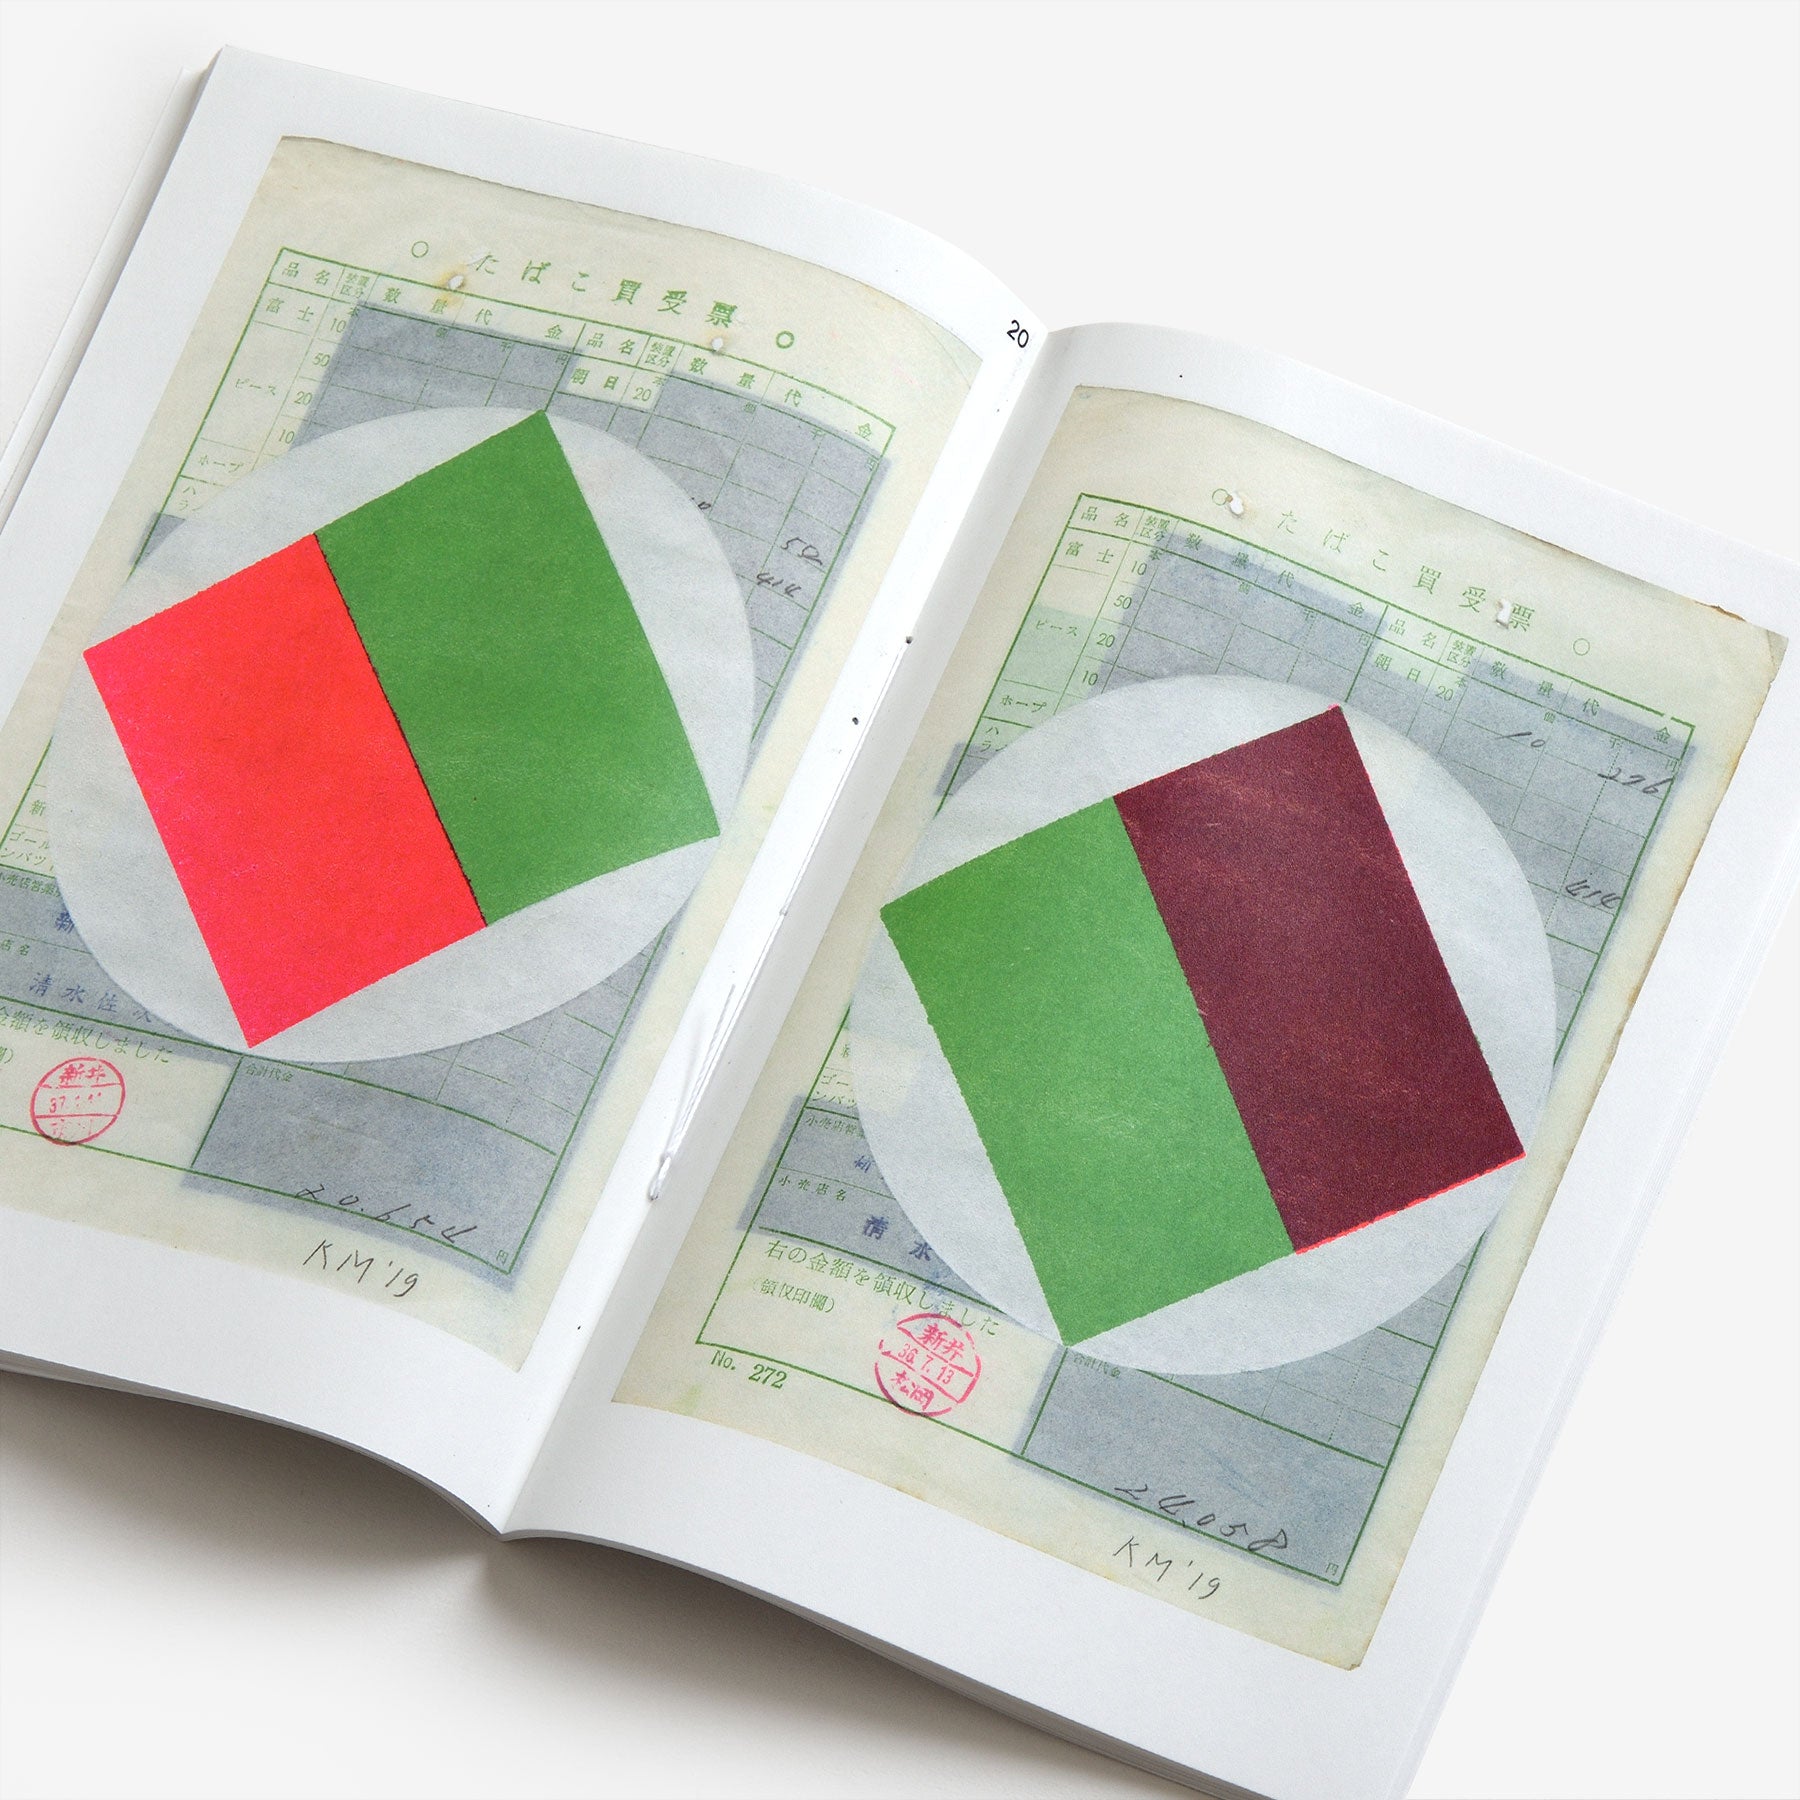 Karel Martens: Tokyo Papers